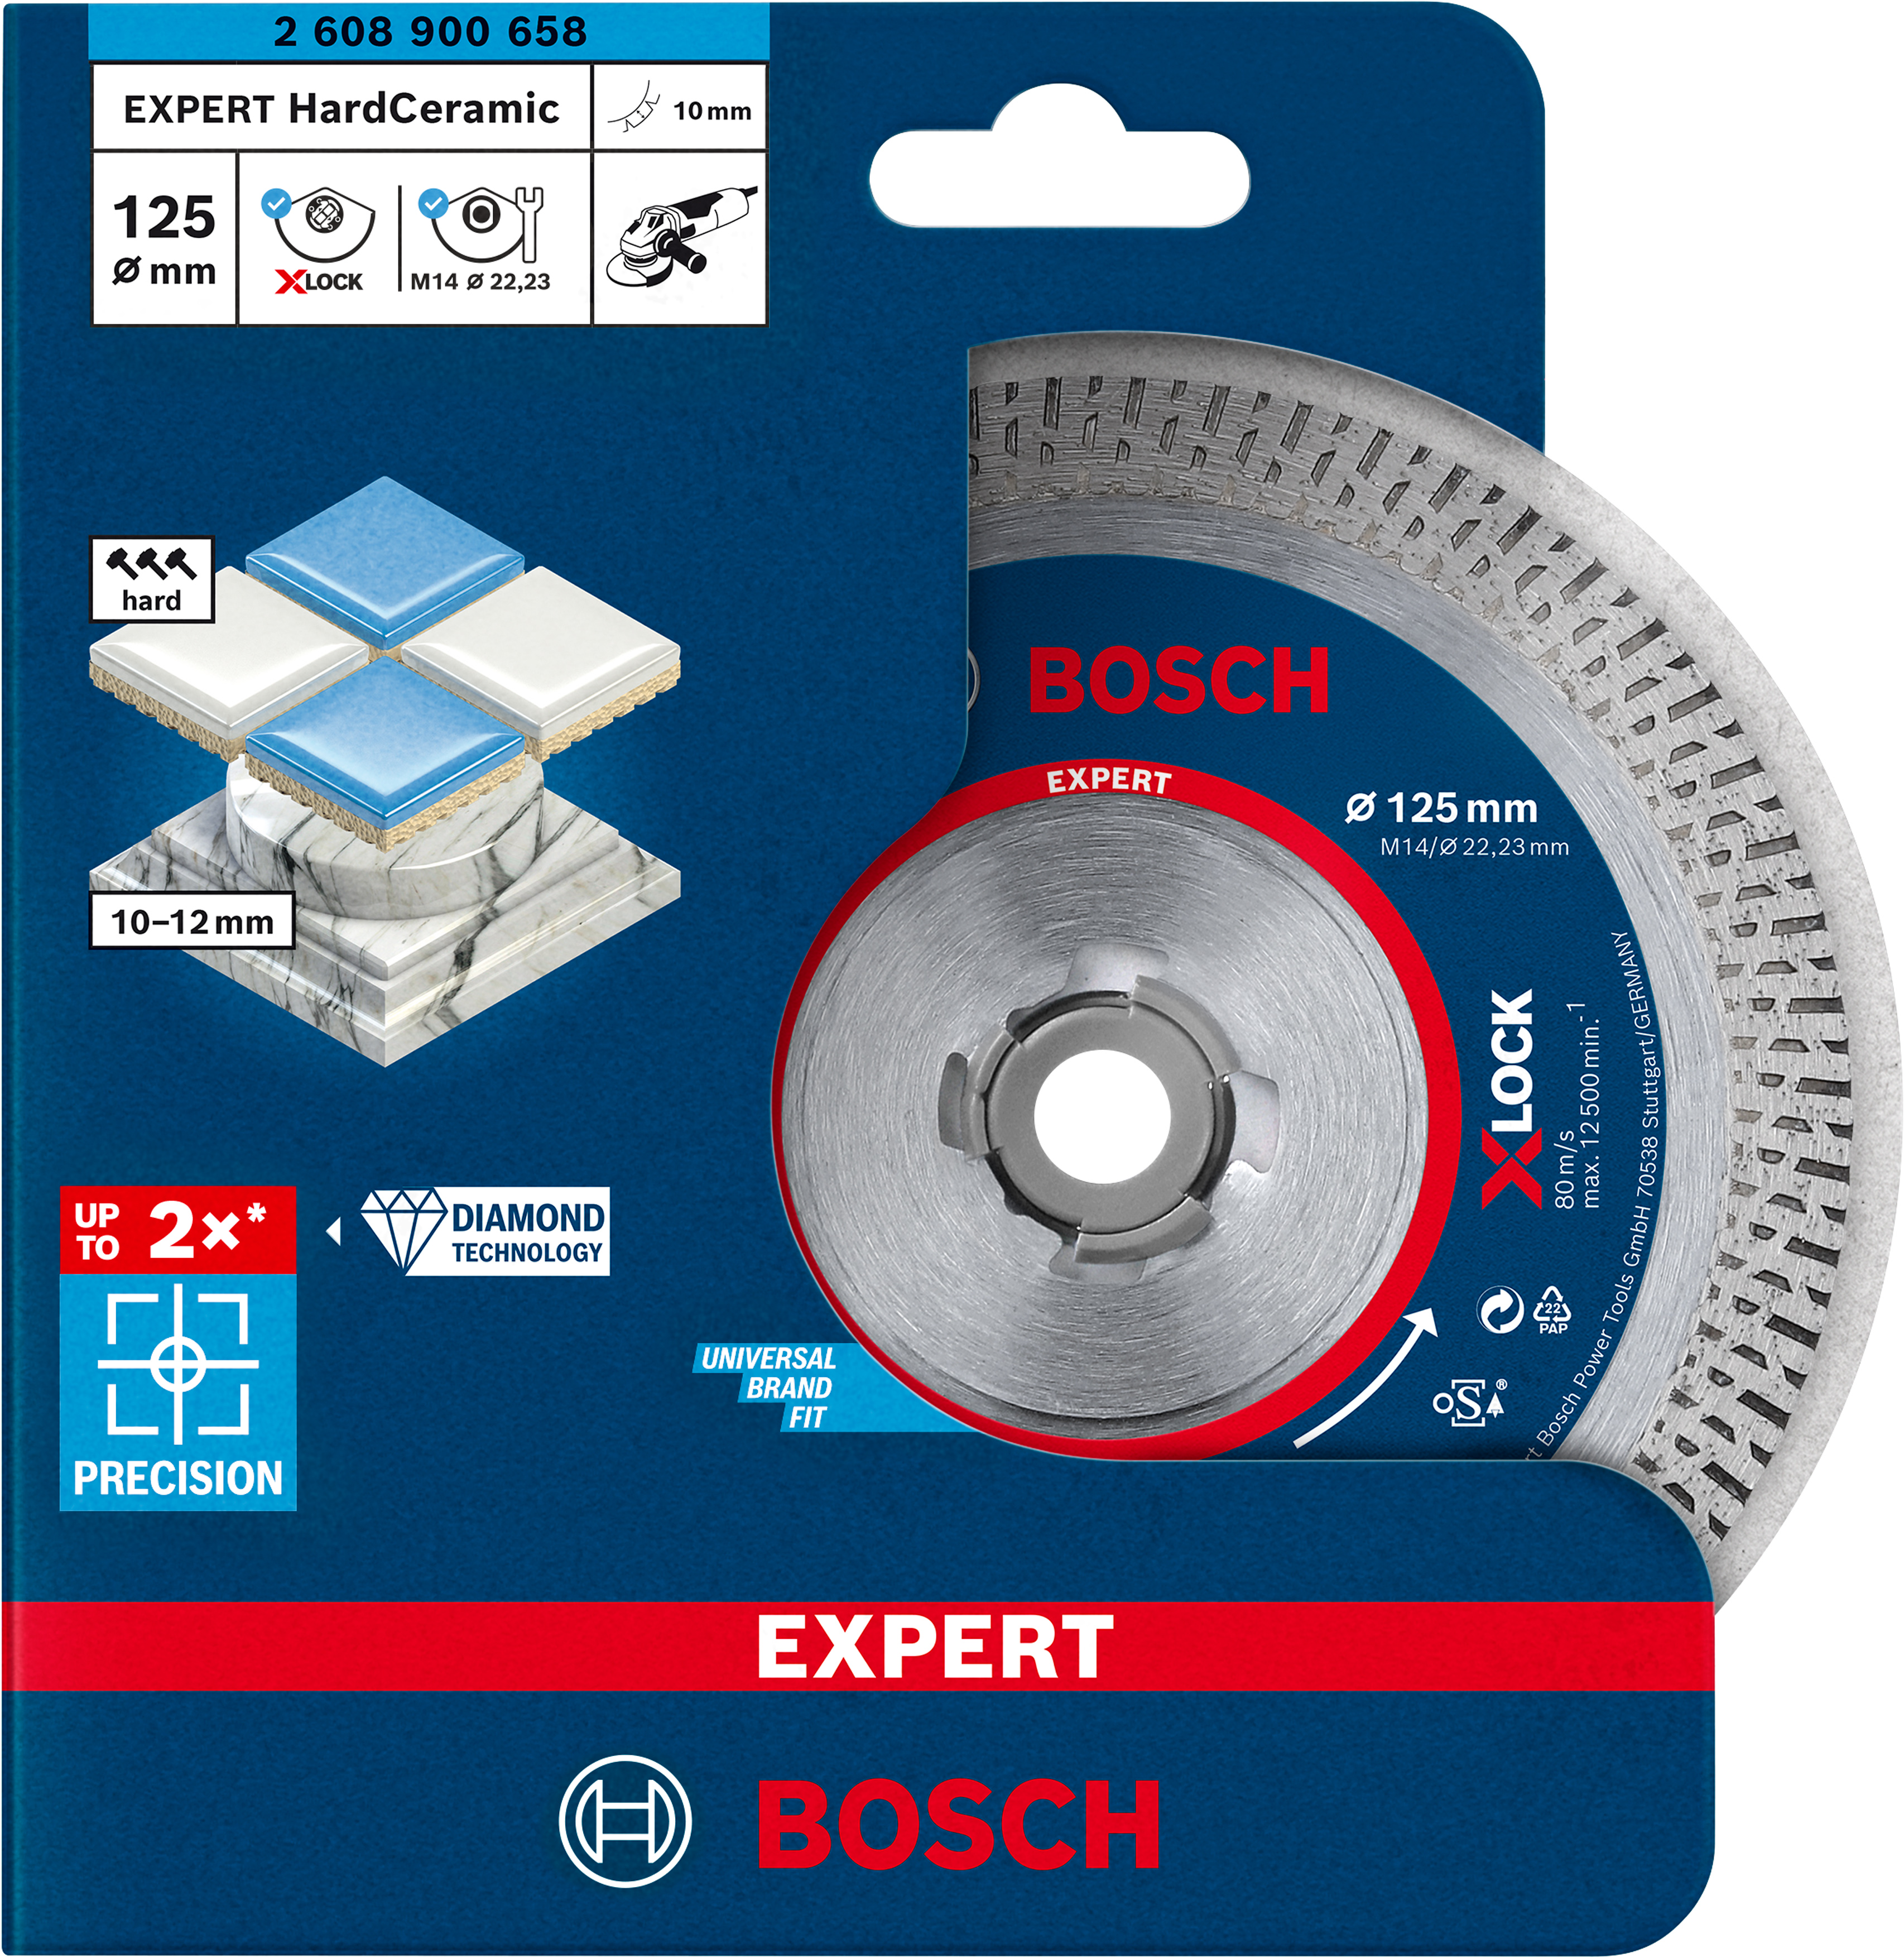 Bosch 125mm X-LOCK Expert HardCeramic Diamond Grinder Cutting Disc